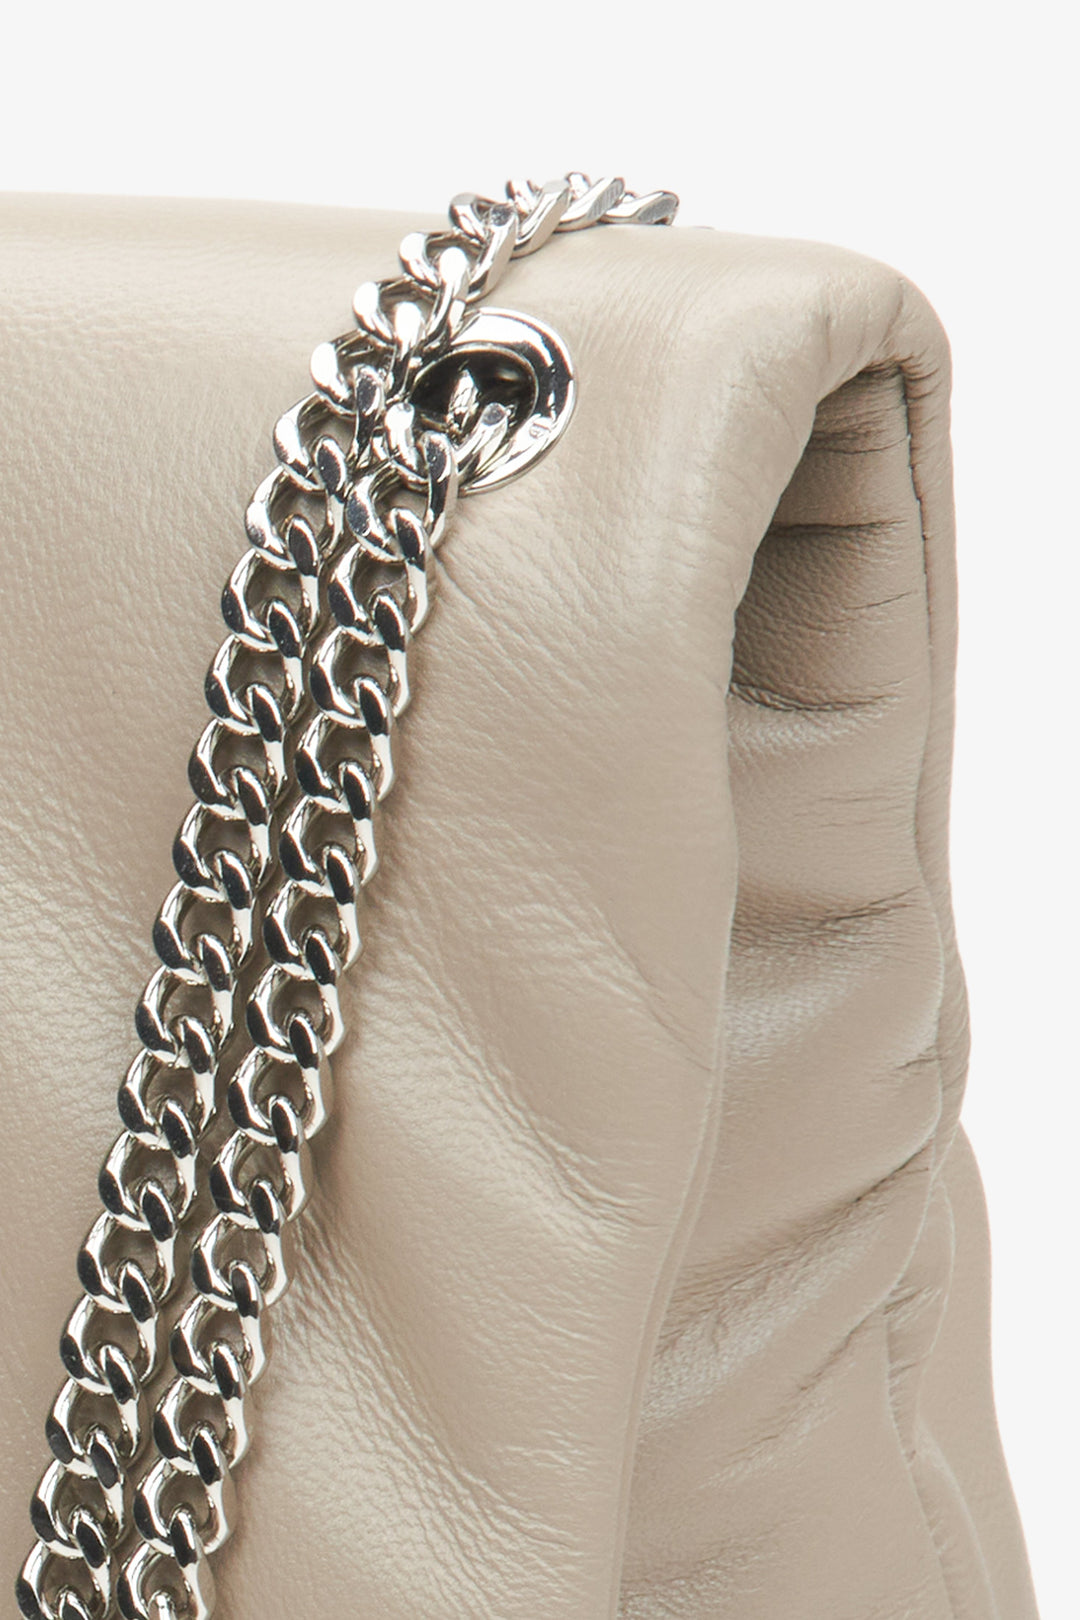 Women's beige and grey  leather handbag Estro - close-up on details.